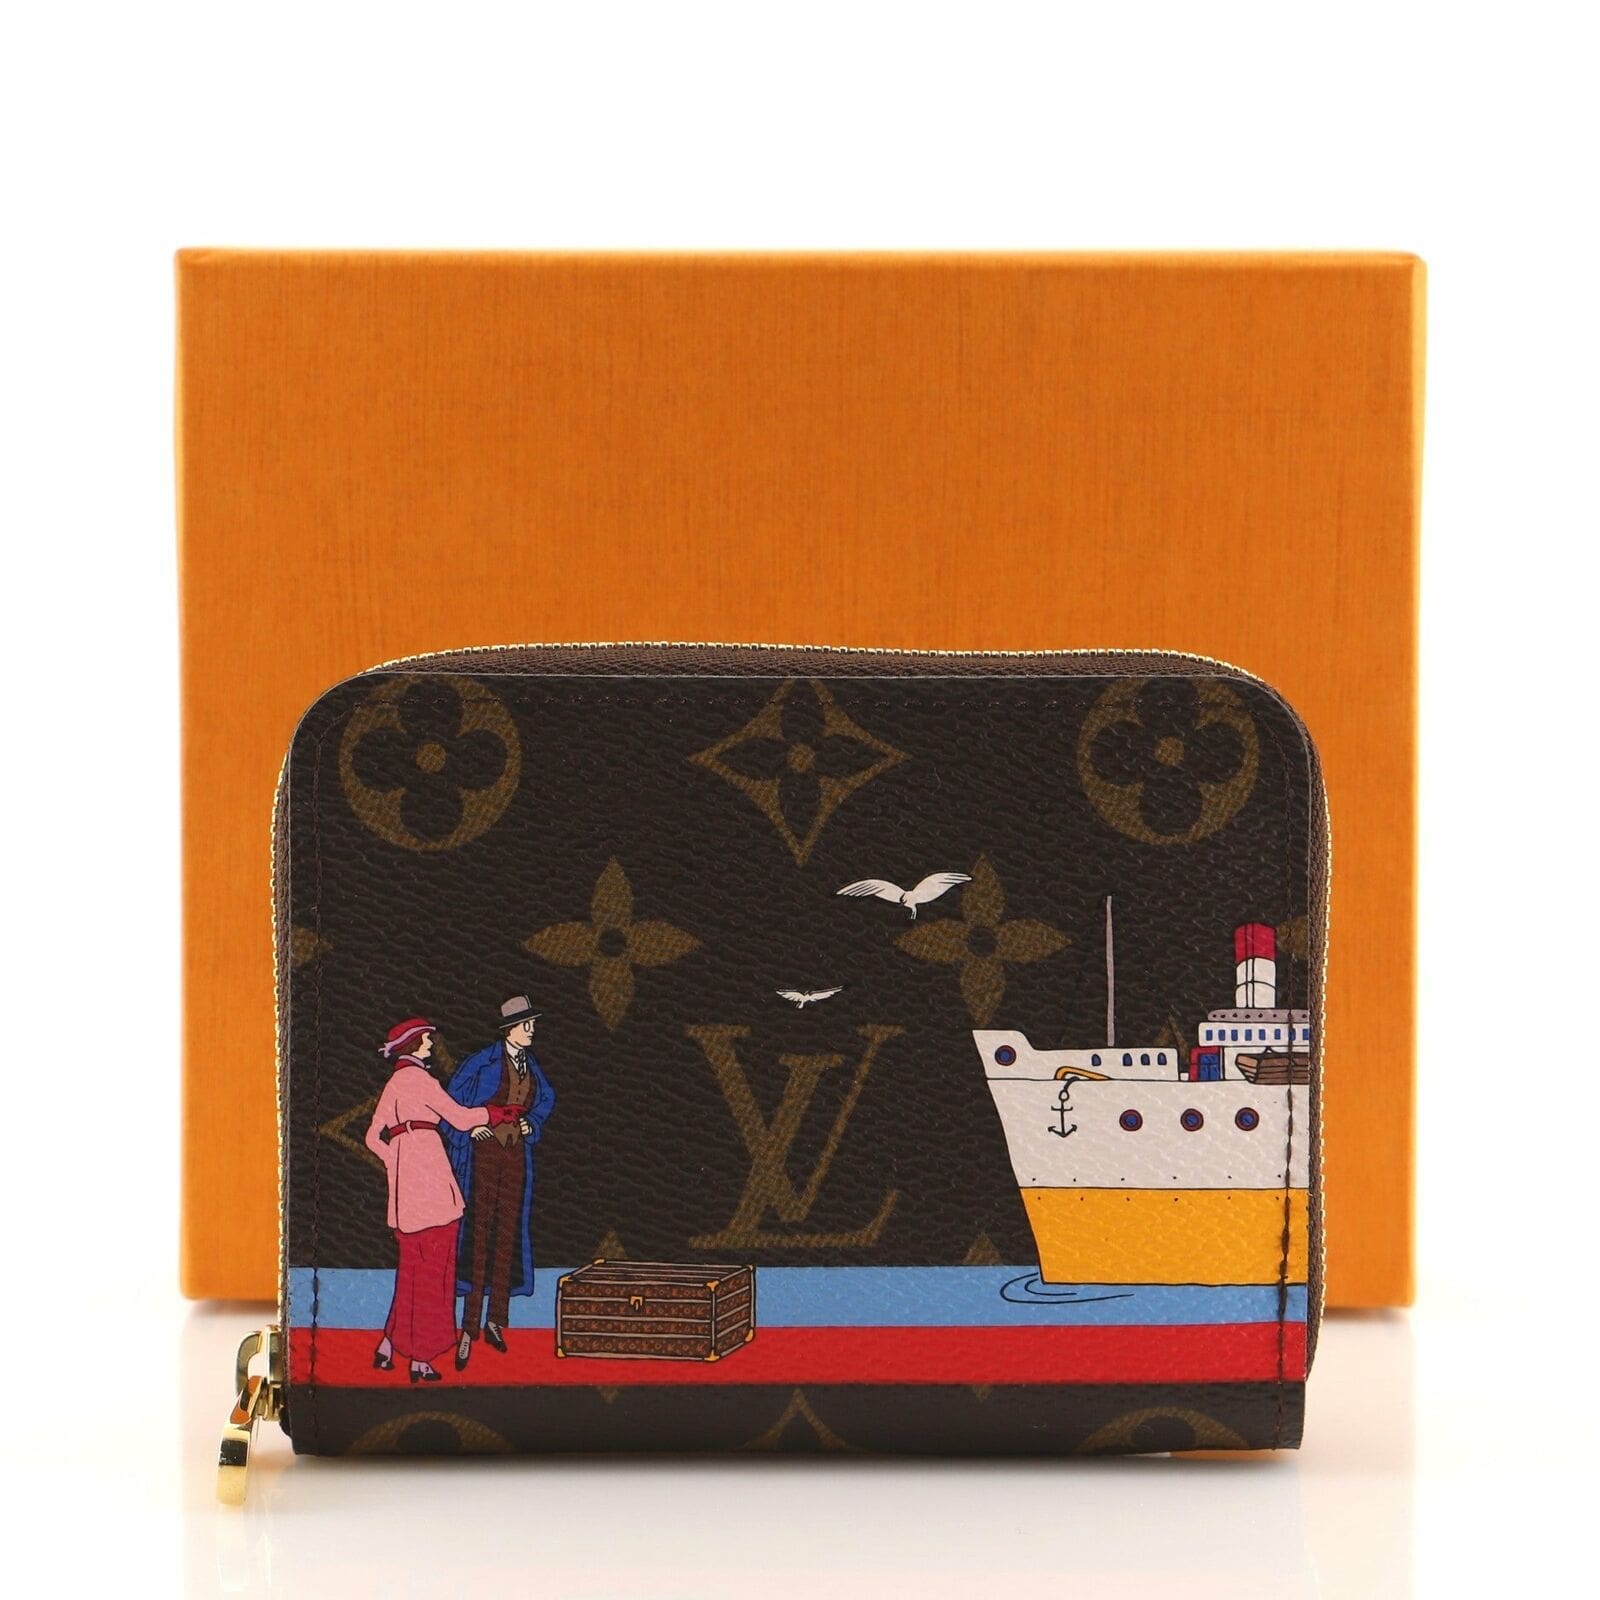 Louis Vuitton 2003 Monet coin purse, SarahbeebeShops Revival